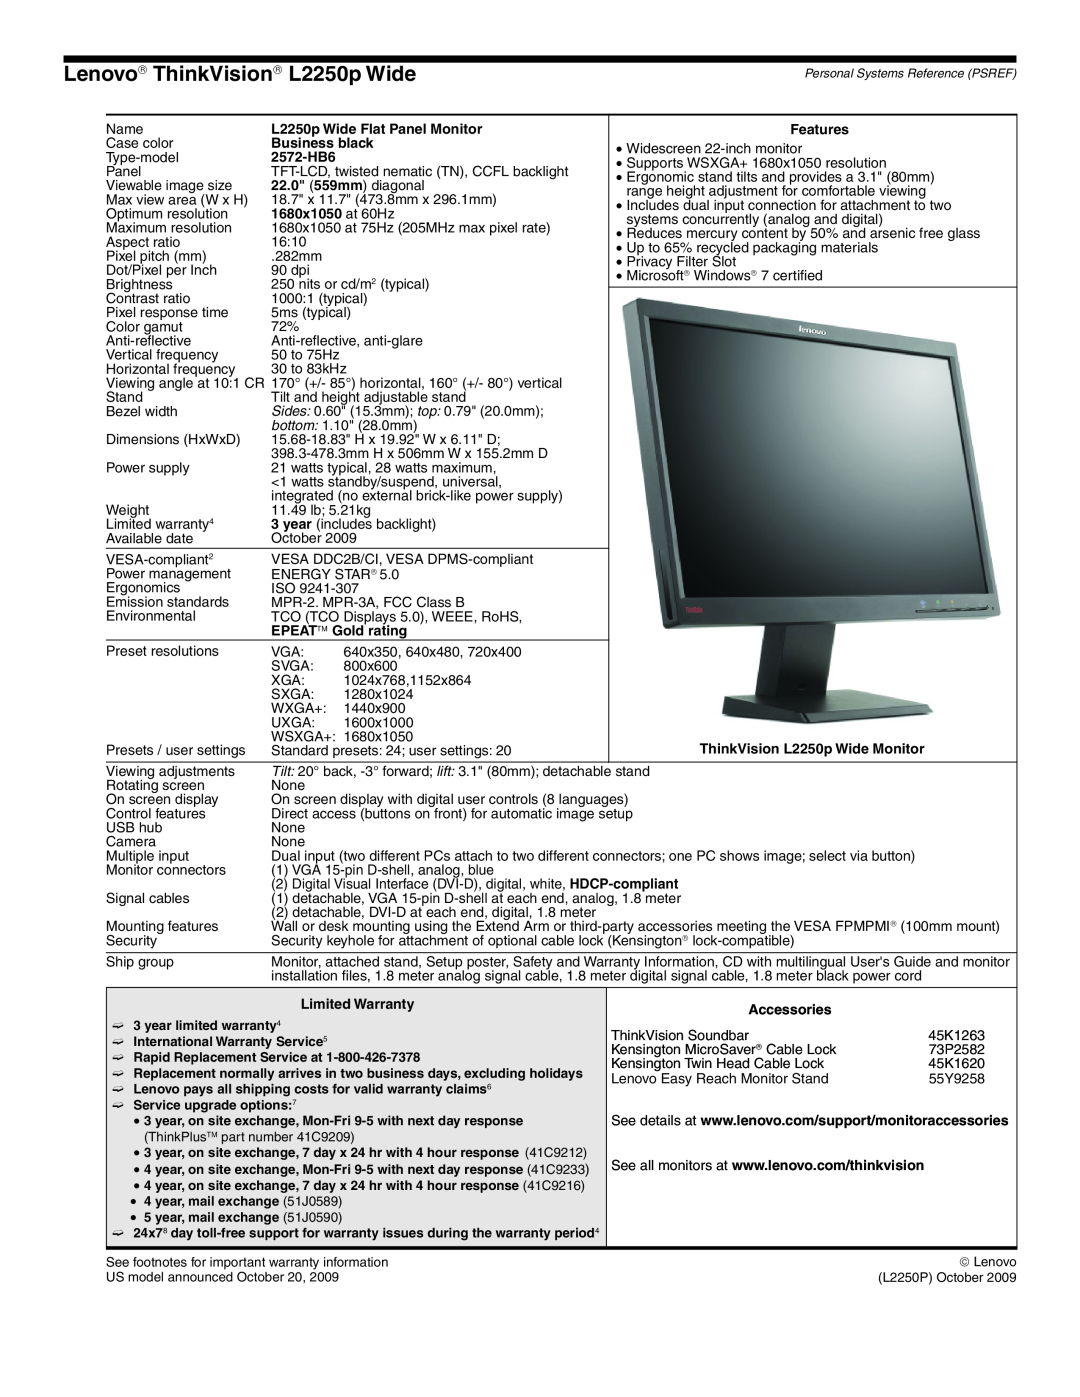 Lenovo L2321x Lenovo→ ThinkVision→ L2250p Wide, L2250p Wide Flat Panel Monitor, 2572-HB6, 22.0 559mm diagonal, Features 